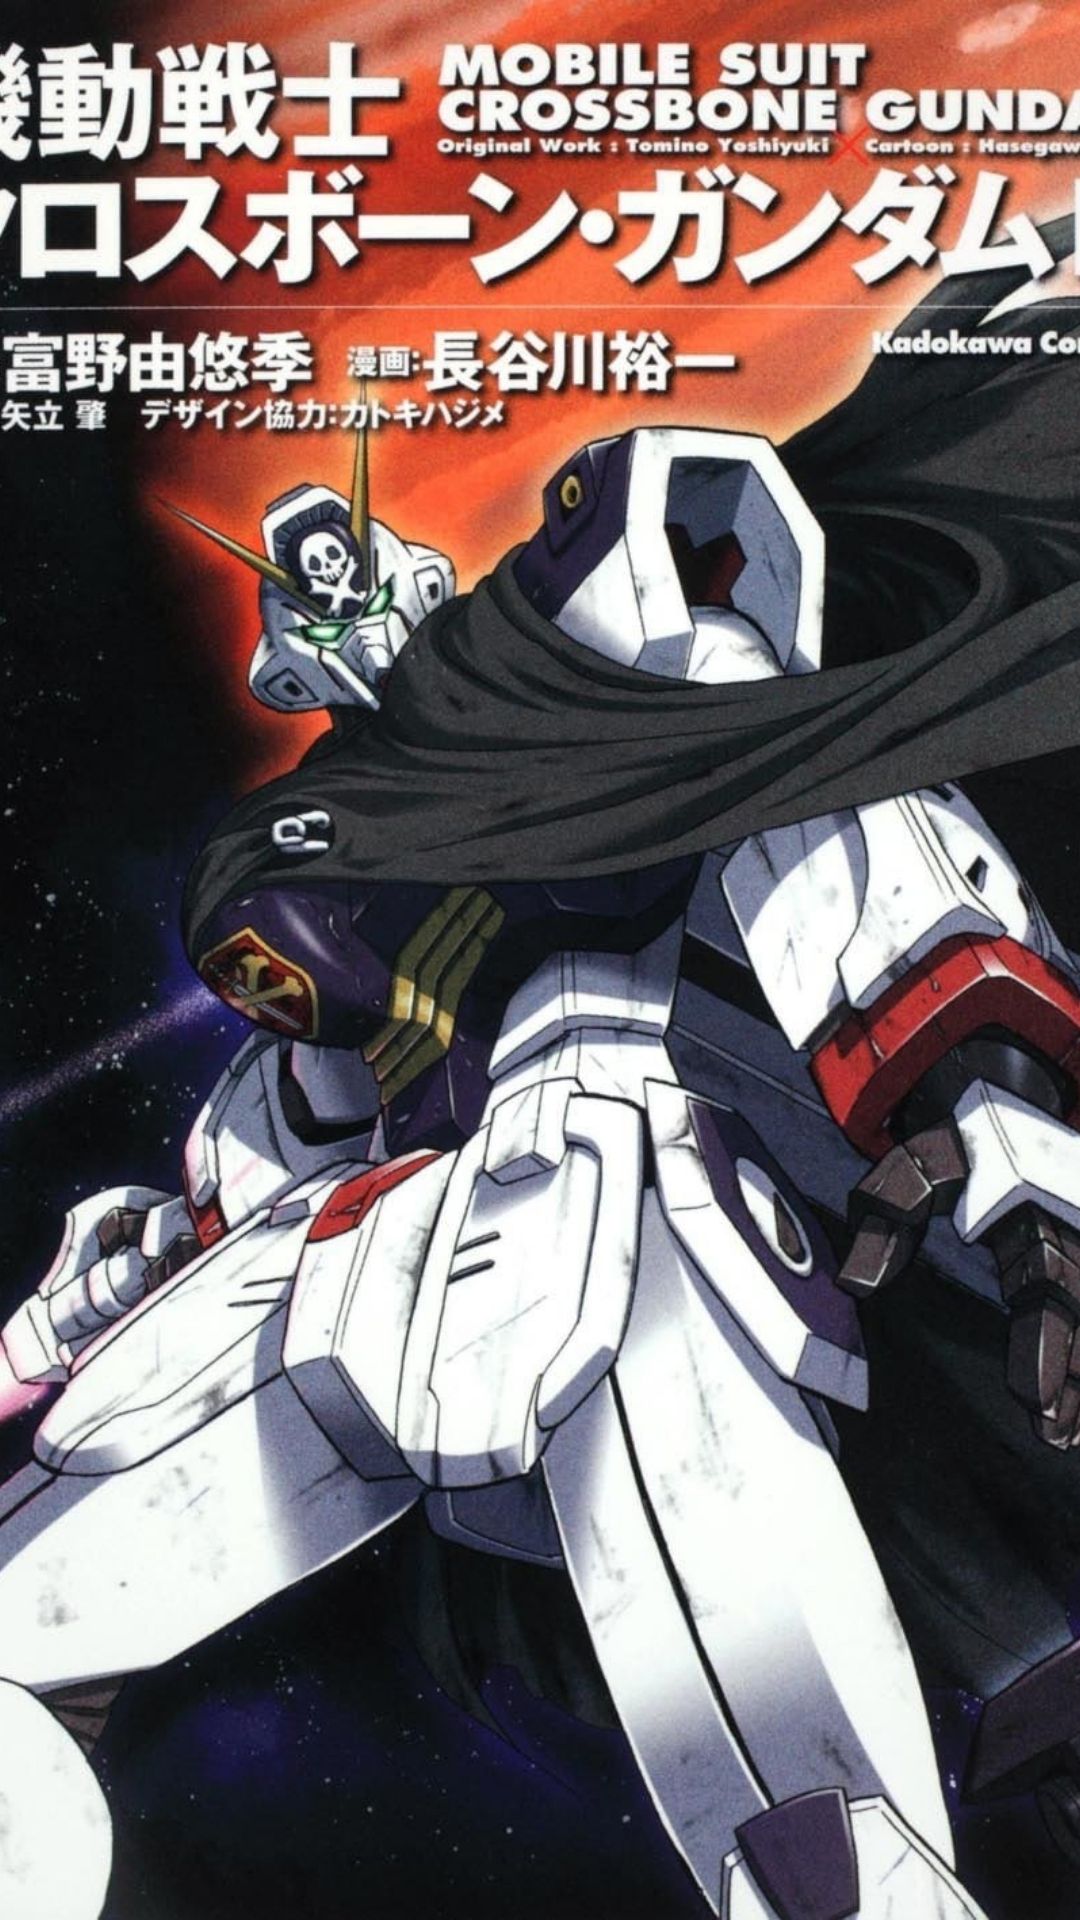 Gundam 0080 War In The Pocket Ova Receives Manga In June